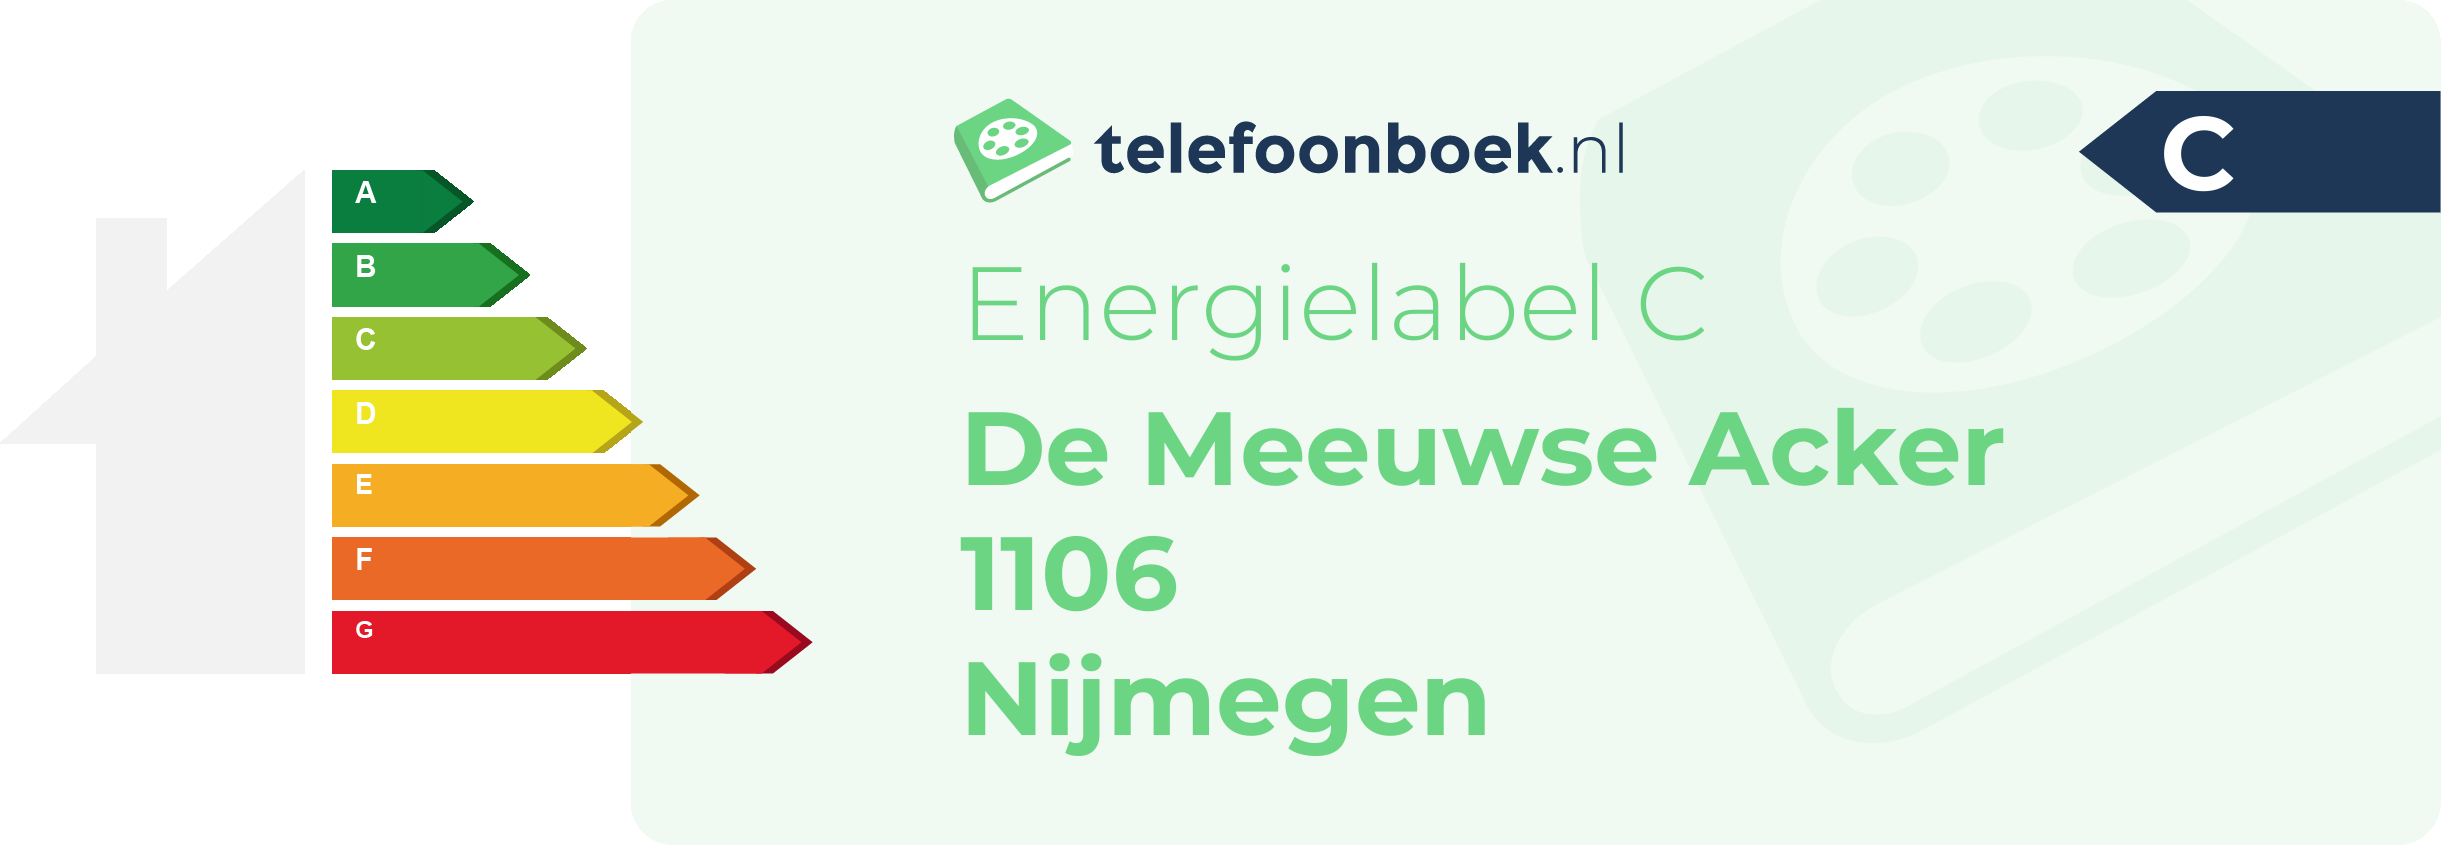 Energielabel De Meeuwse Acker 1106 Nijmegen